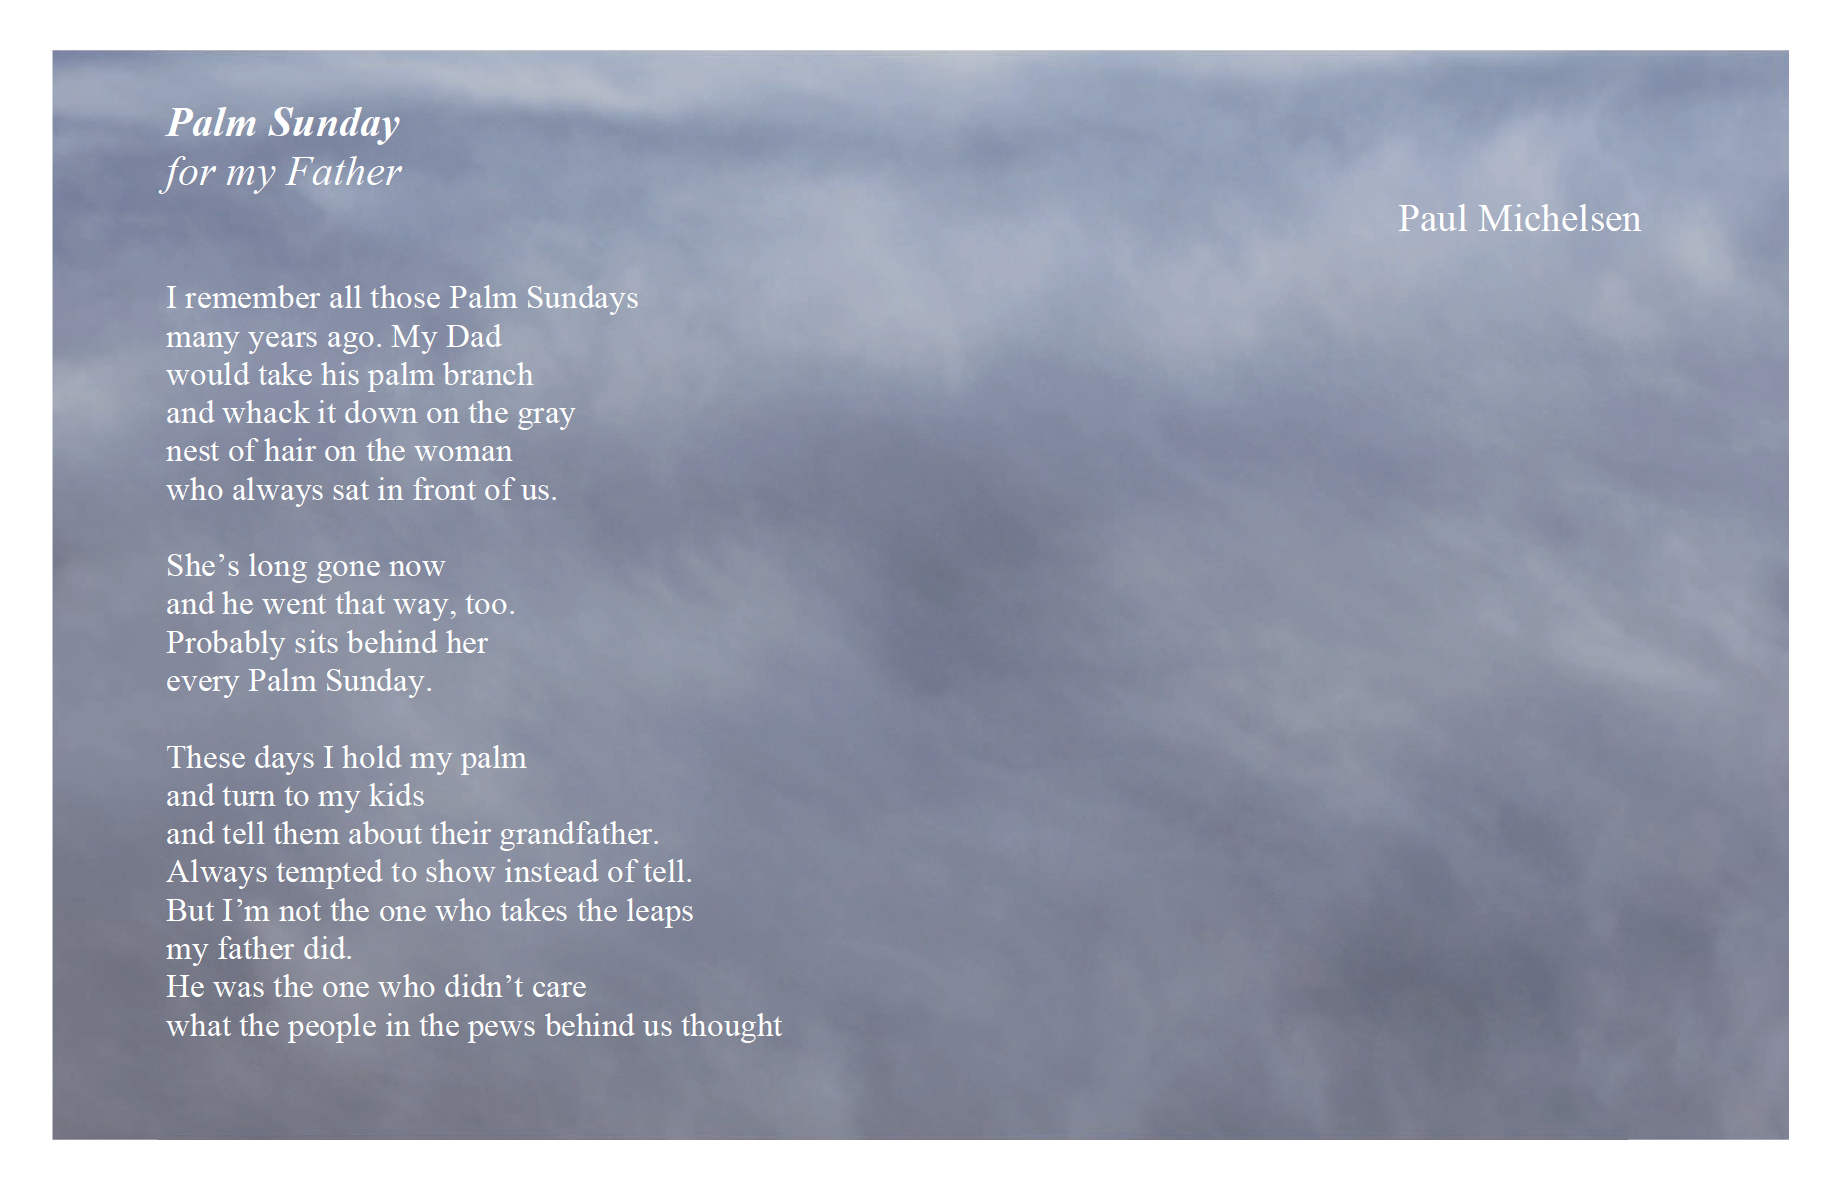 Paul Michelsen, "Palm Sunday"